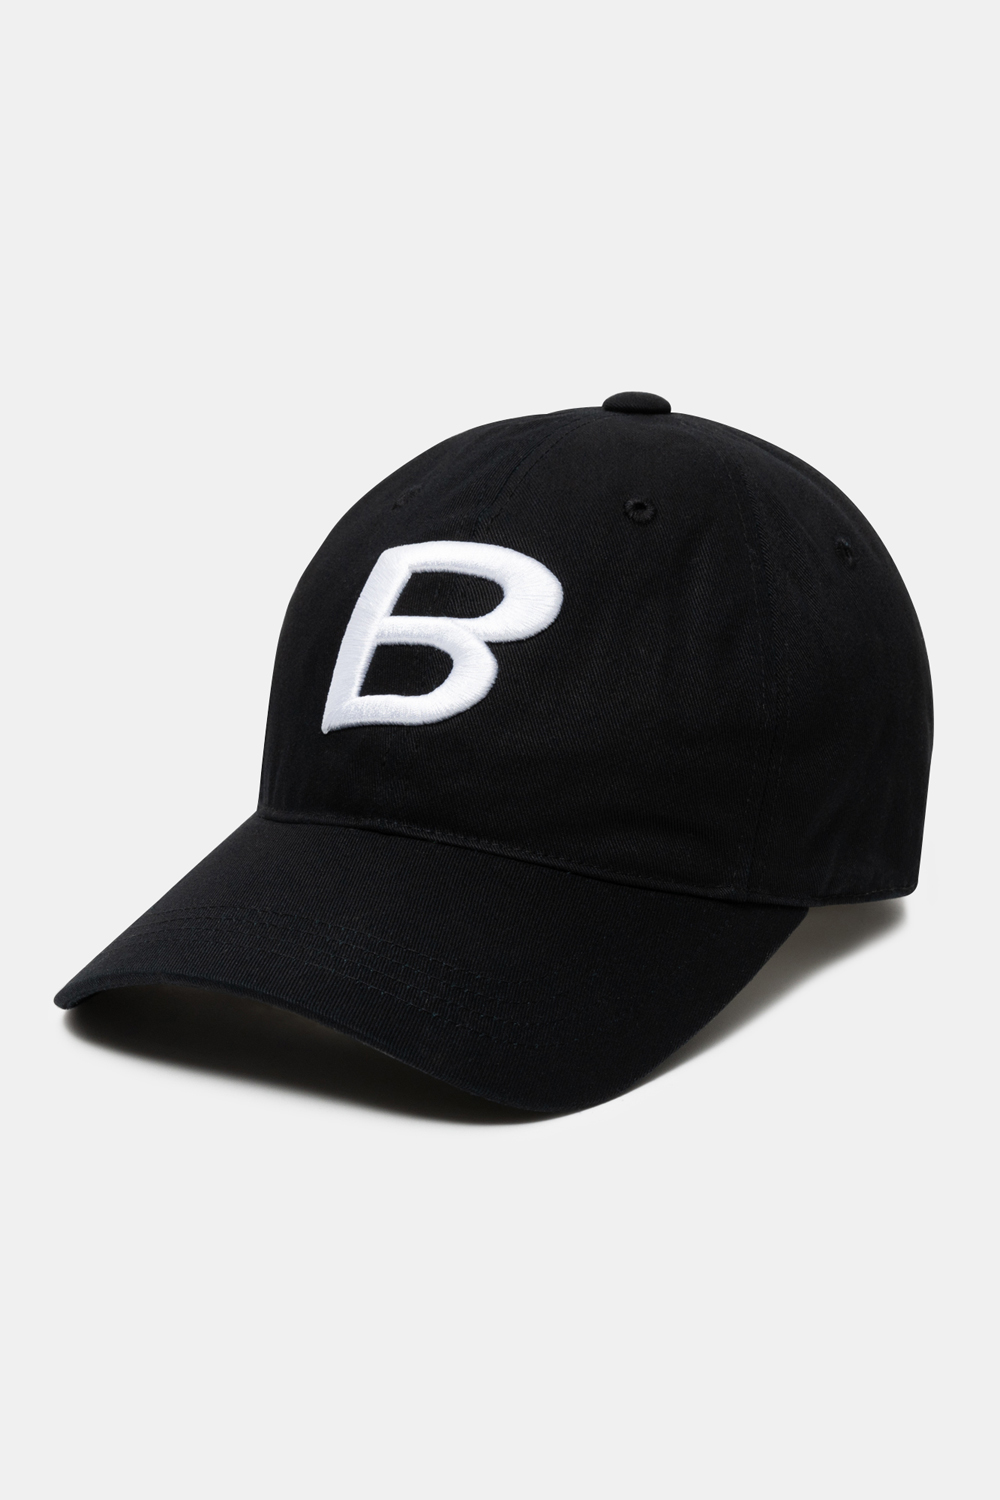 B LOGO BALL CAP/BLKBLACK